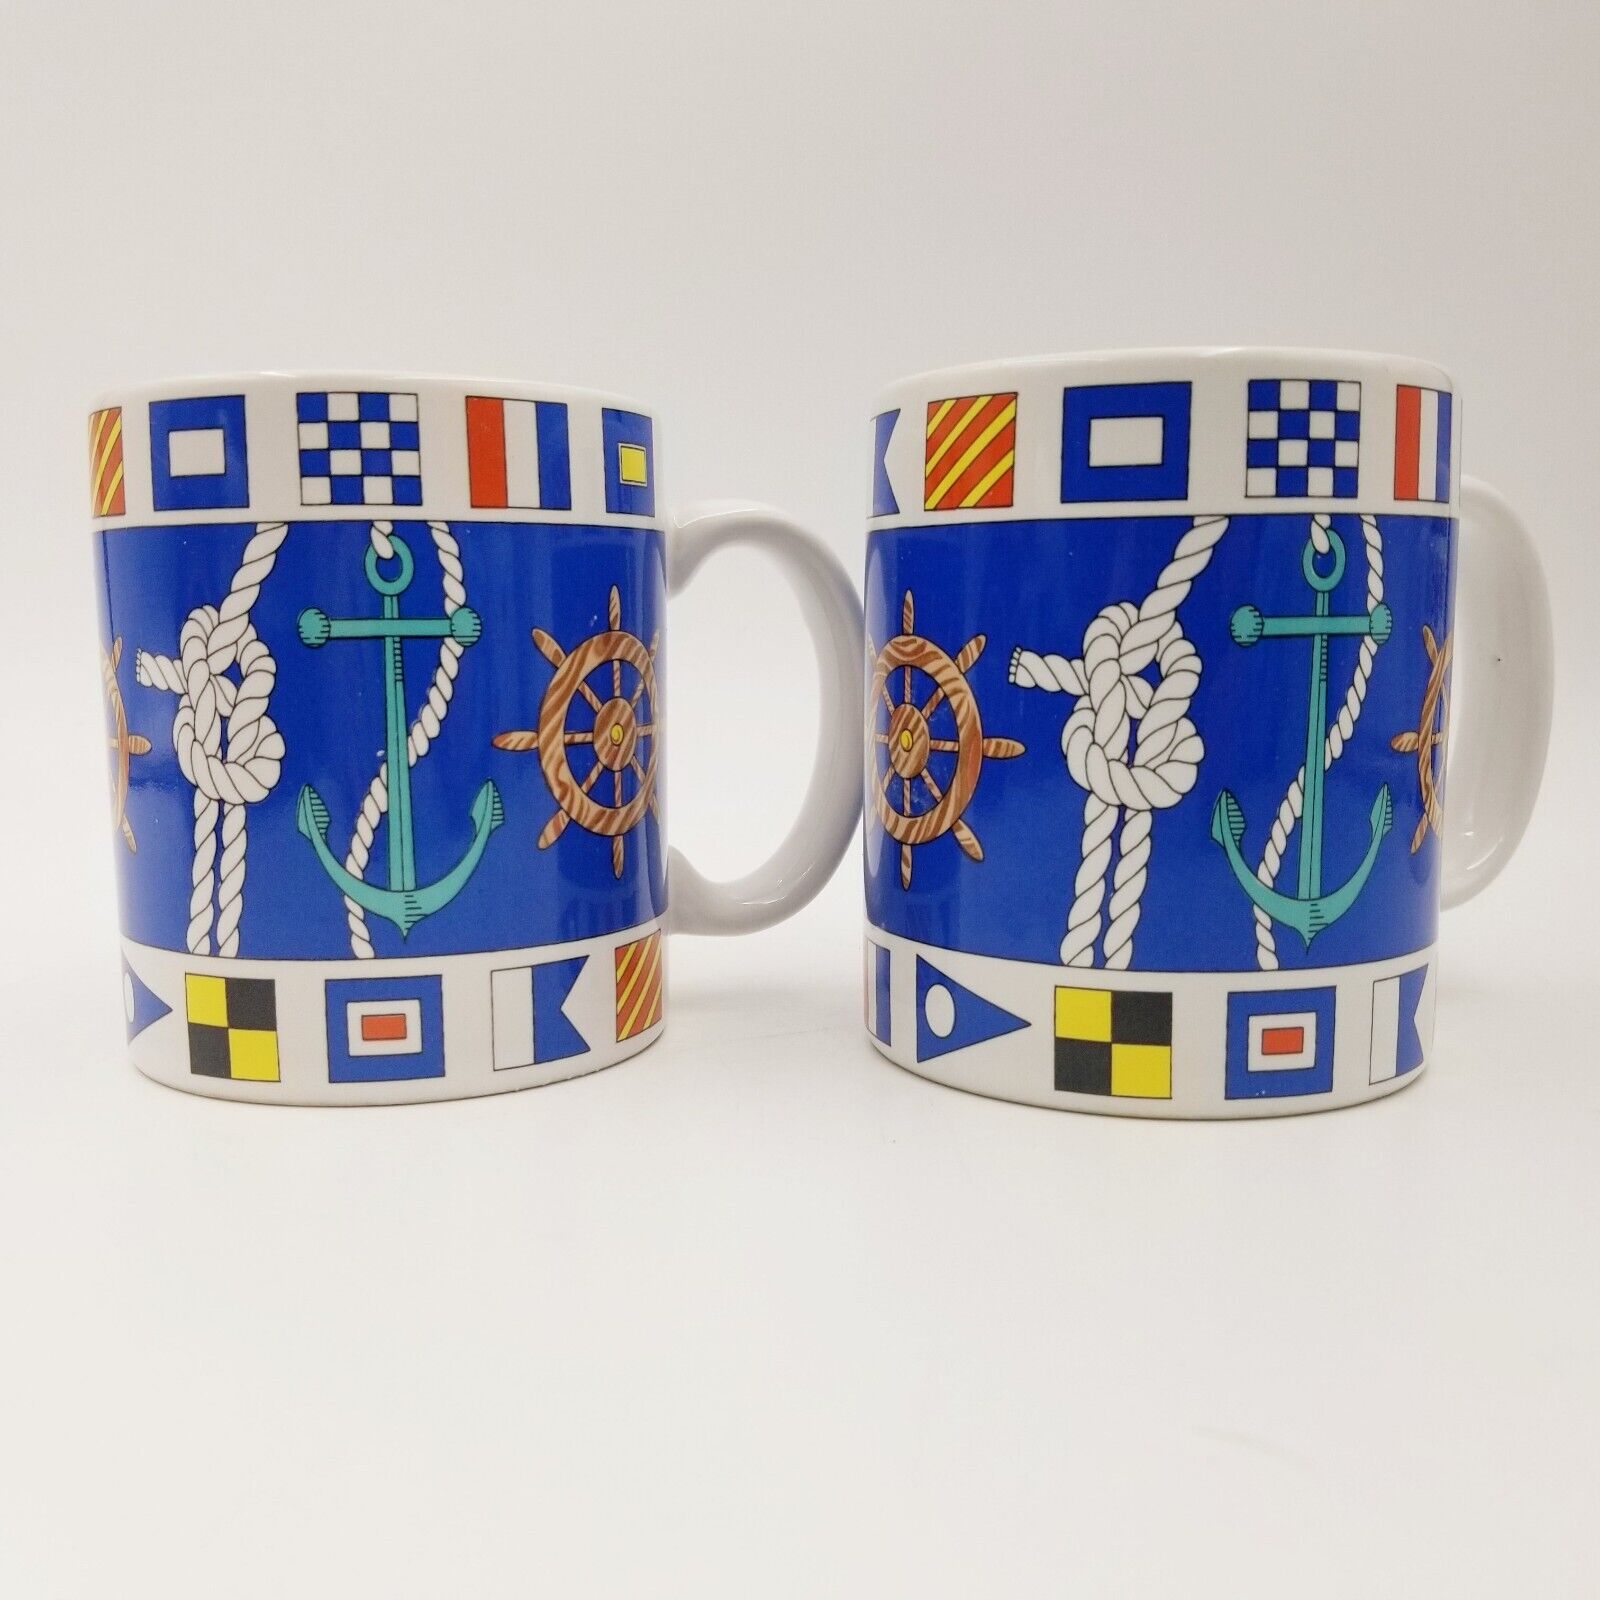 Stanley Papel Otagiri Nautical Coffee Mug Cup Porcelain Ceramic Vintage Set of 2